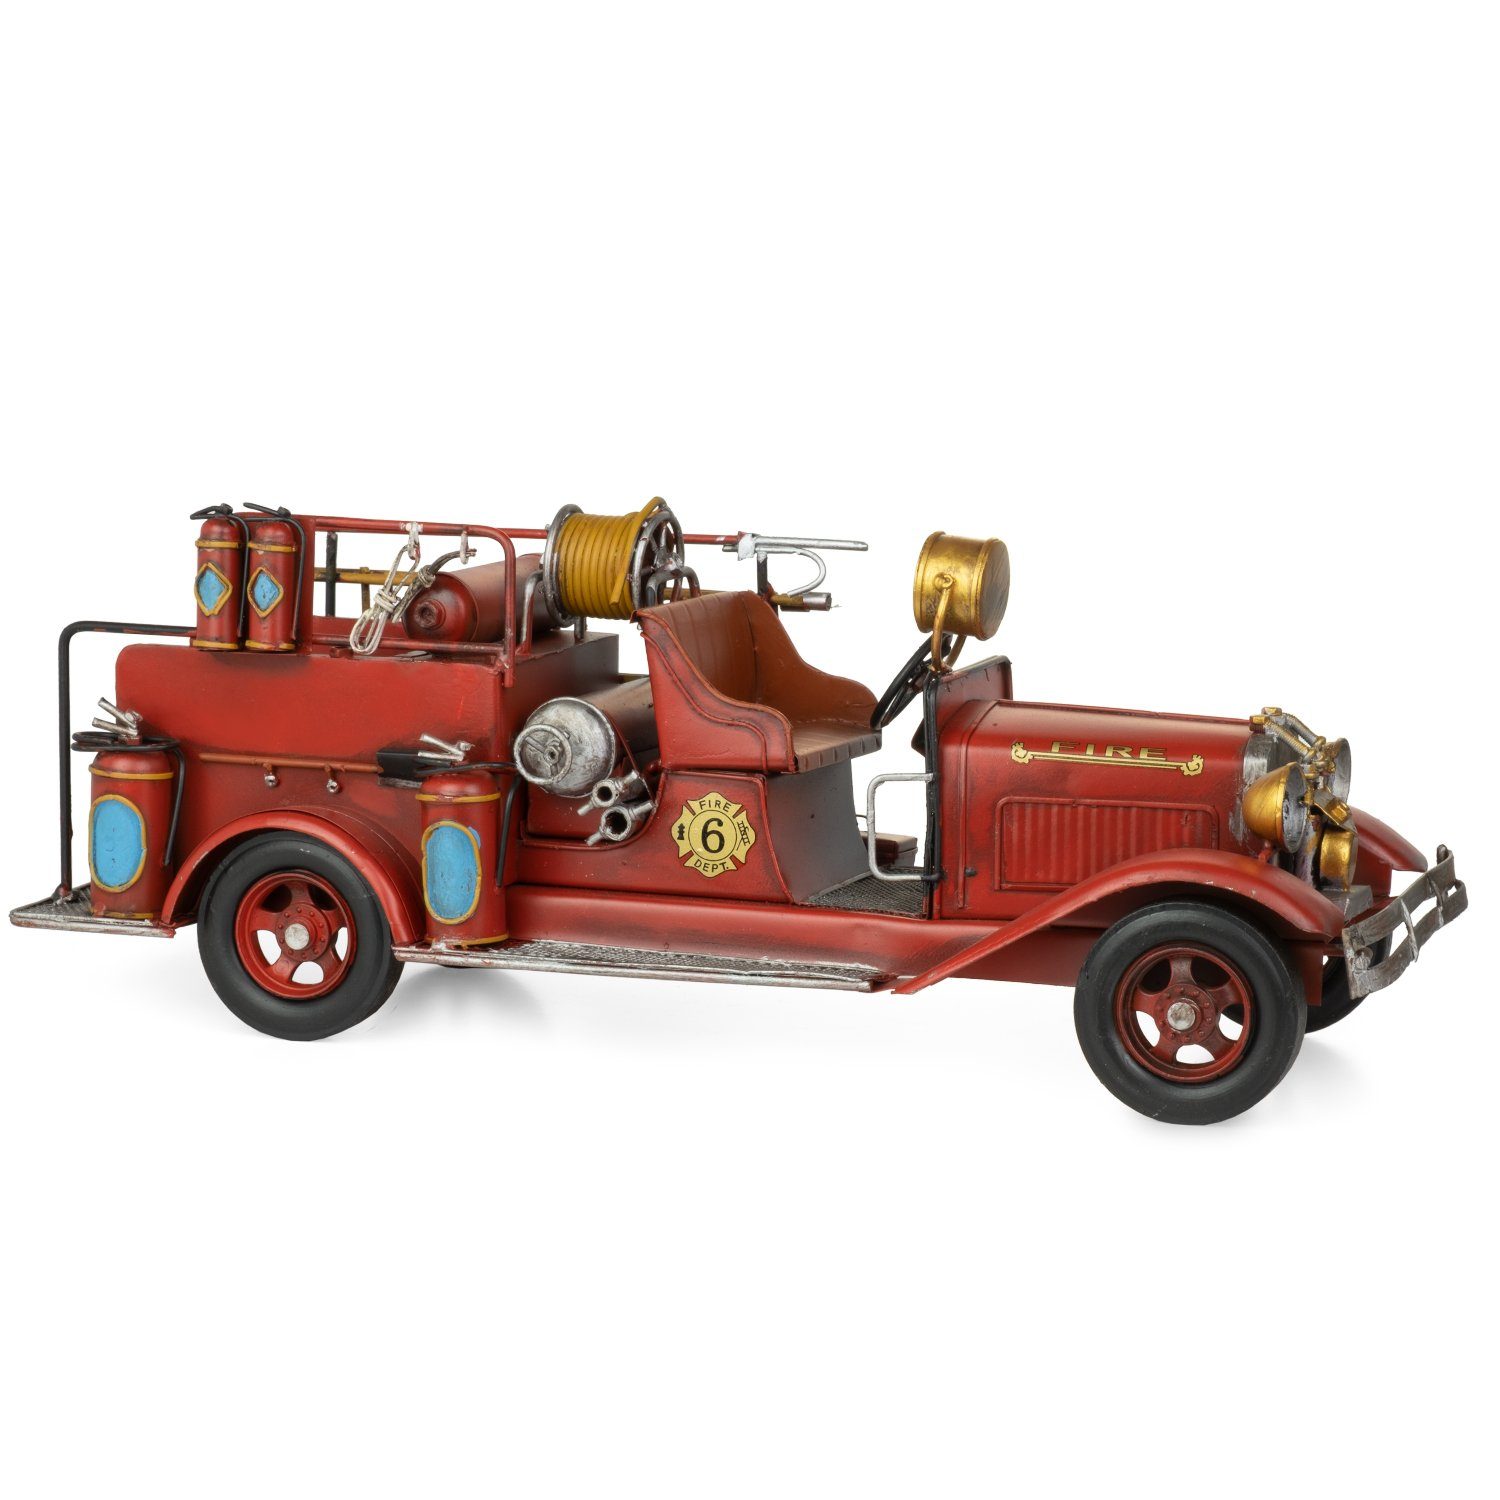 Moritz Dekoobjekt Blech-Deko Auto Oldtimer Feuerwehrwagen Nr. 6, Modell Nostalgie Antik-Stil Retro Blechmodell Miniatur Nachbildung | Deko-Objekte